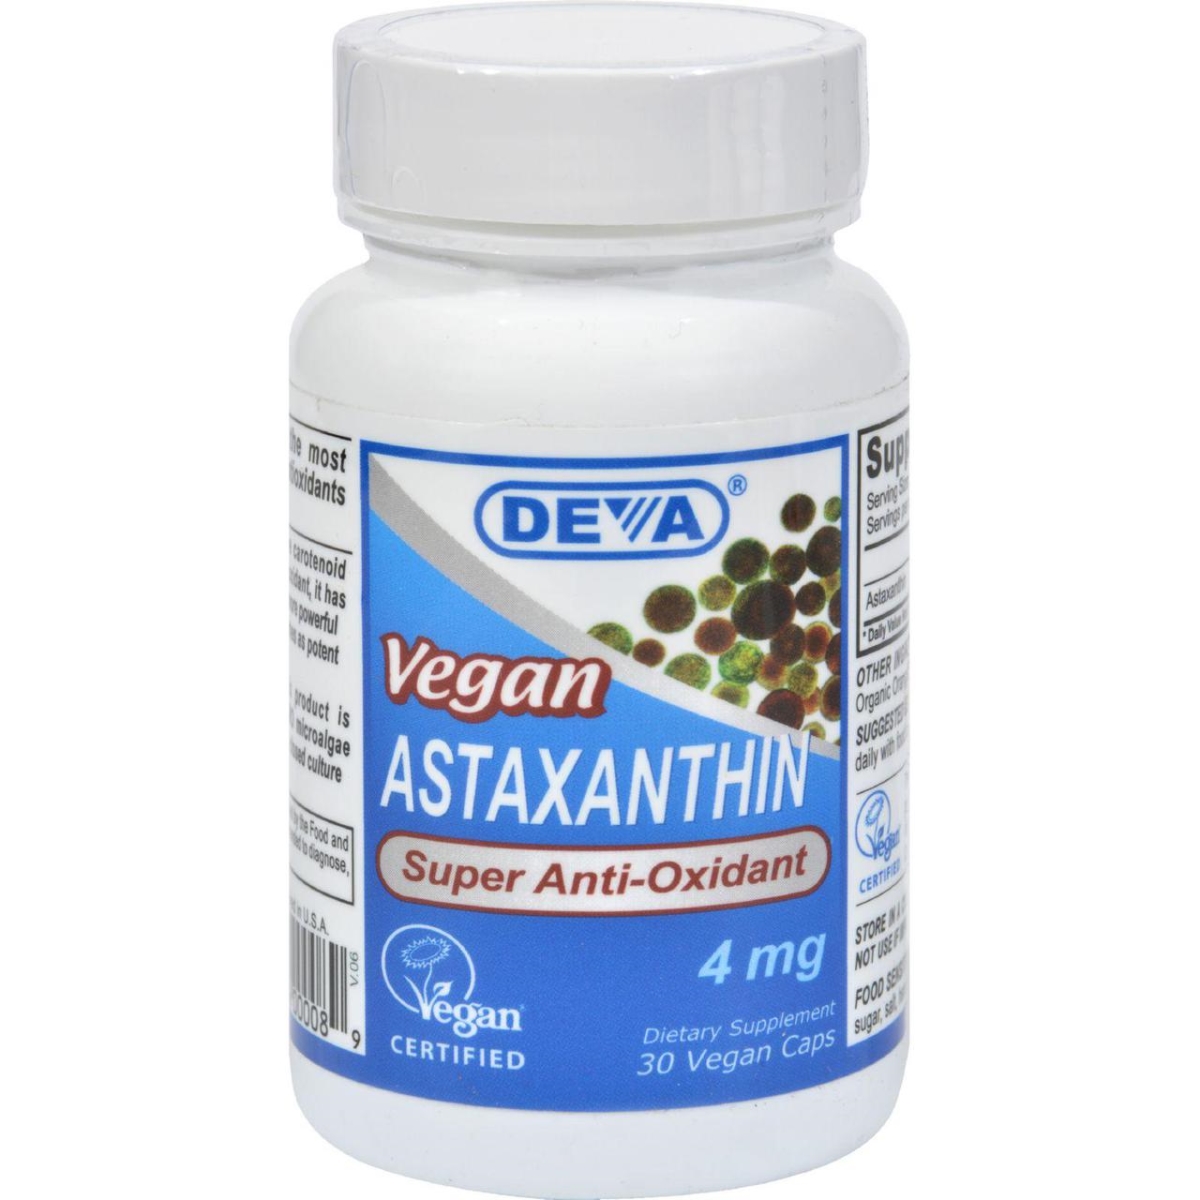 Hg0911735 4 Mg Astaxanthin Super Antioxidant, 30 Capsules